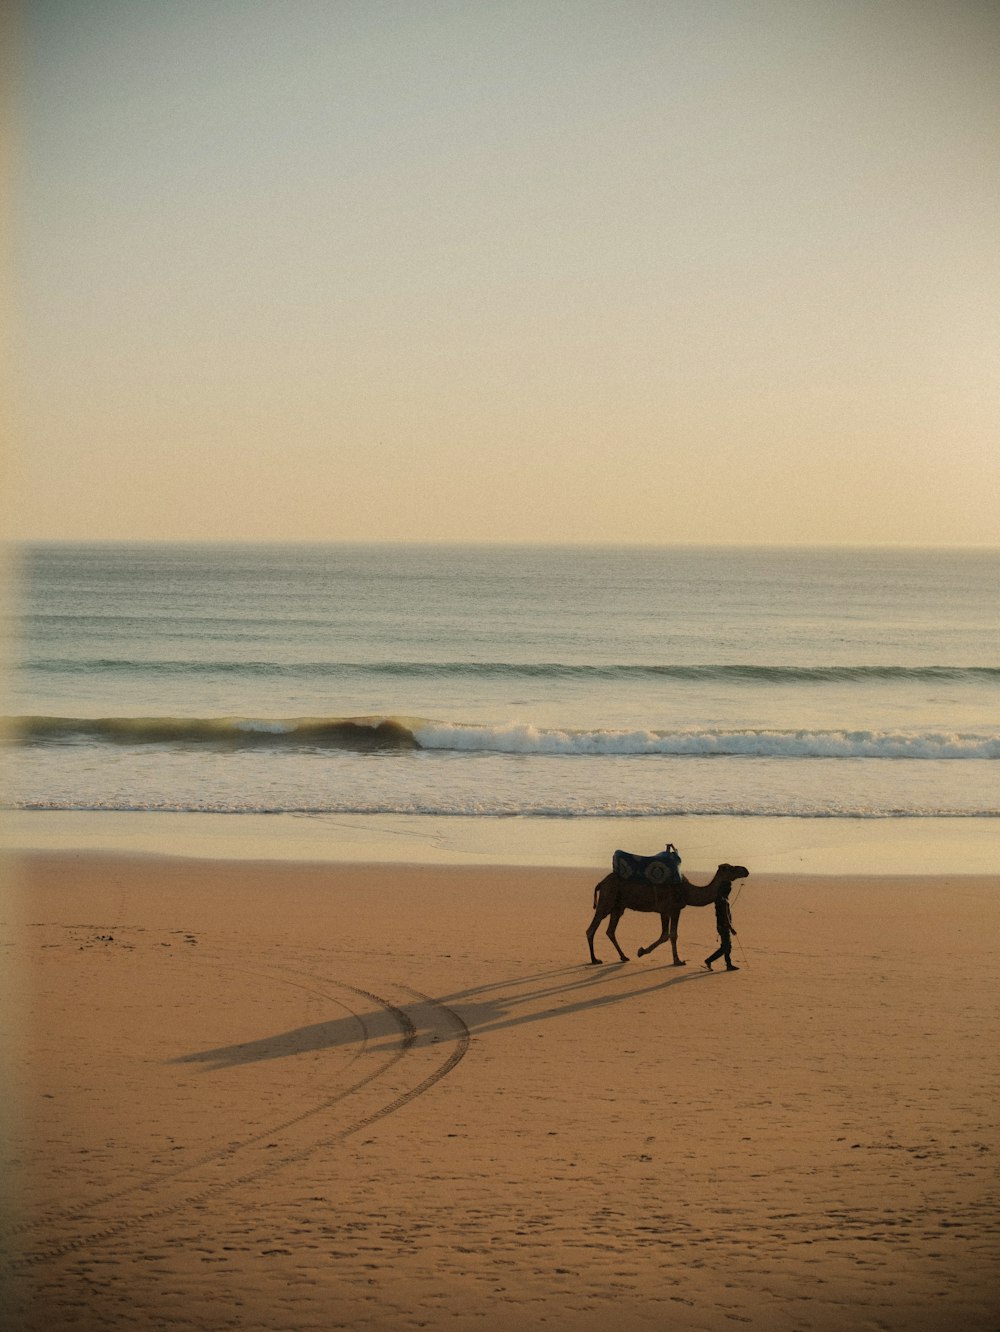 a couple of dogs walking across a sandy beach